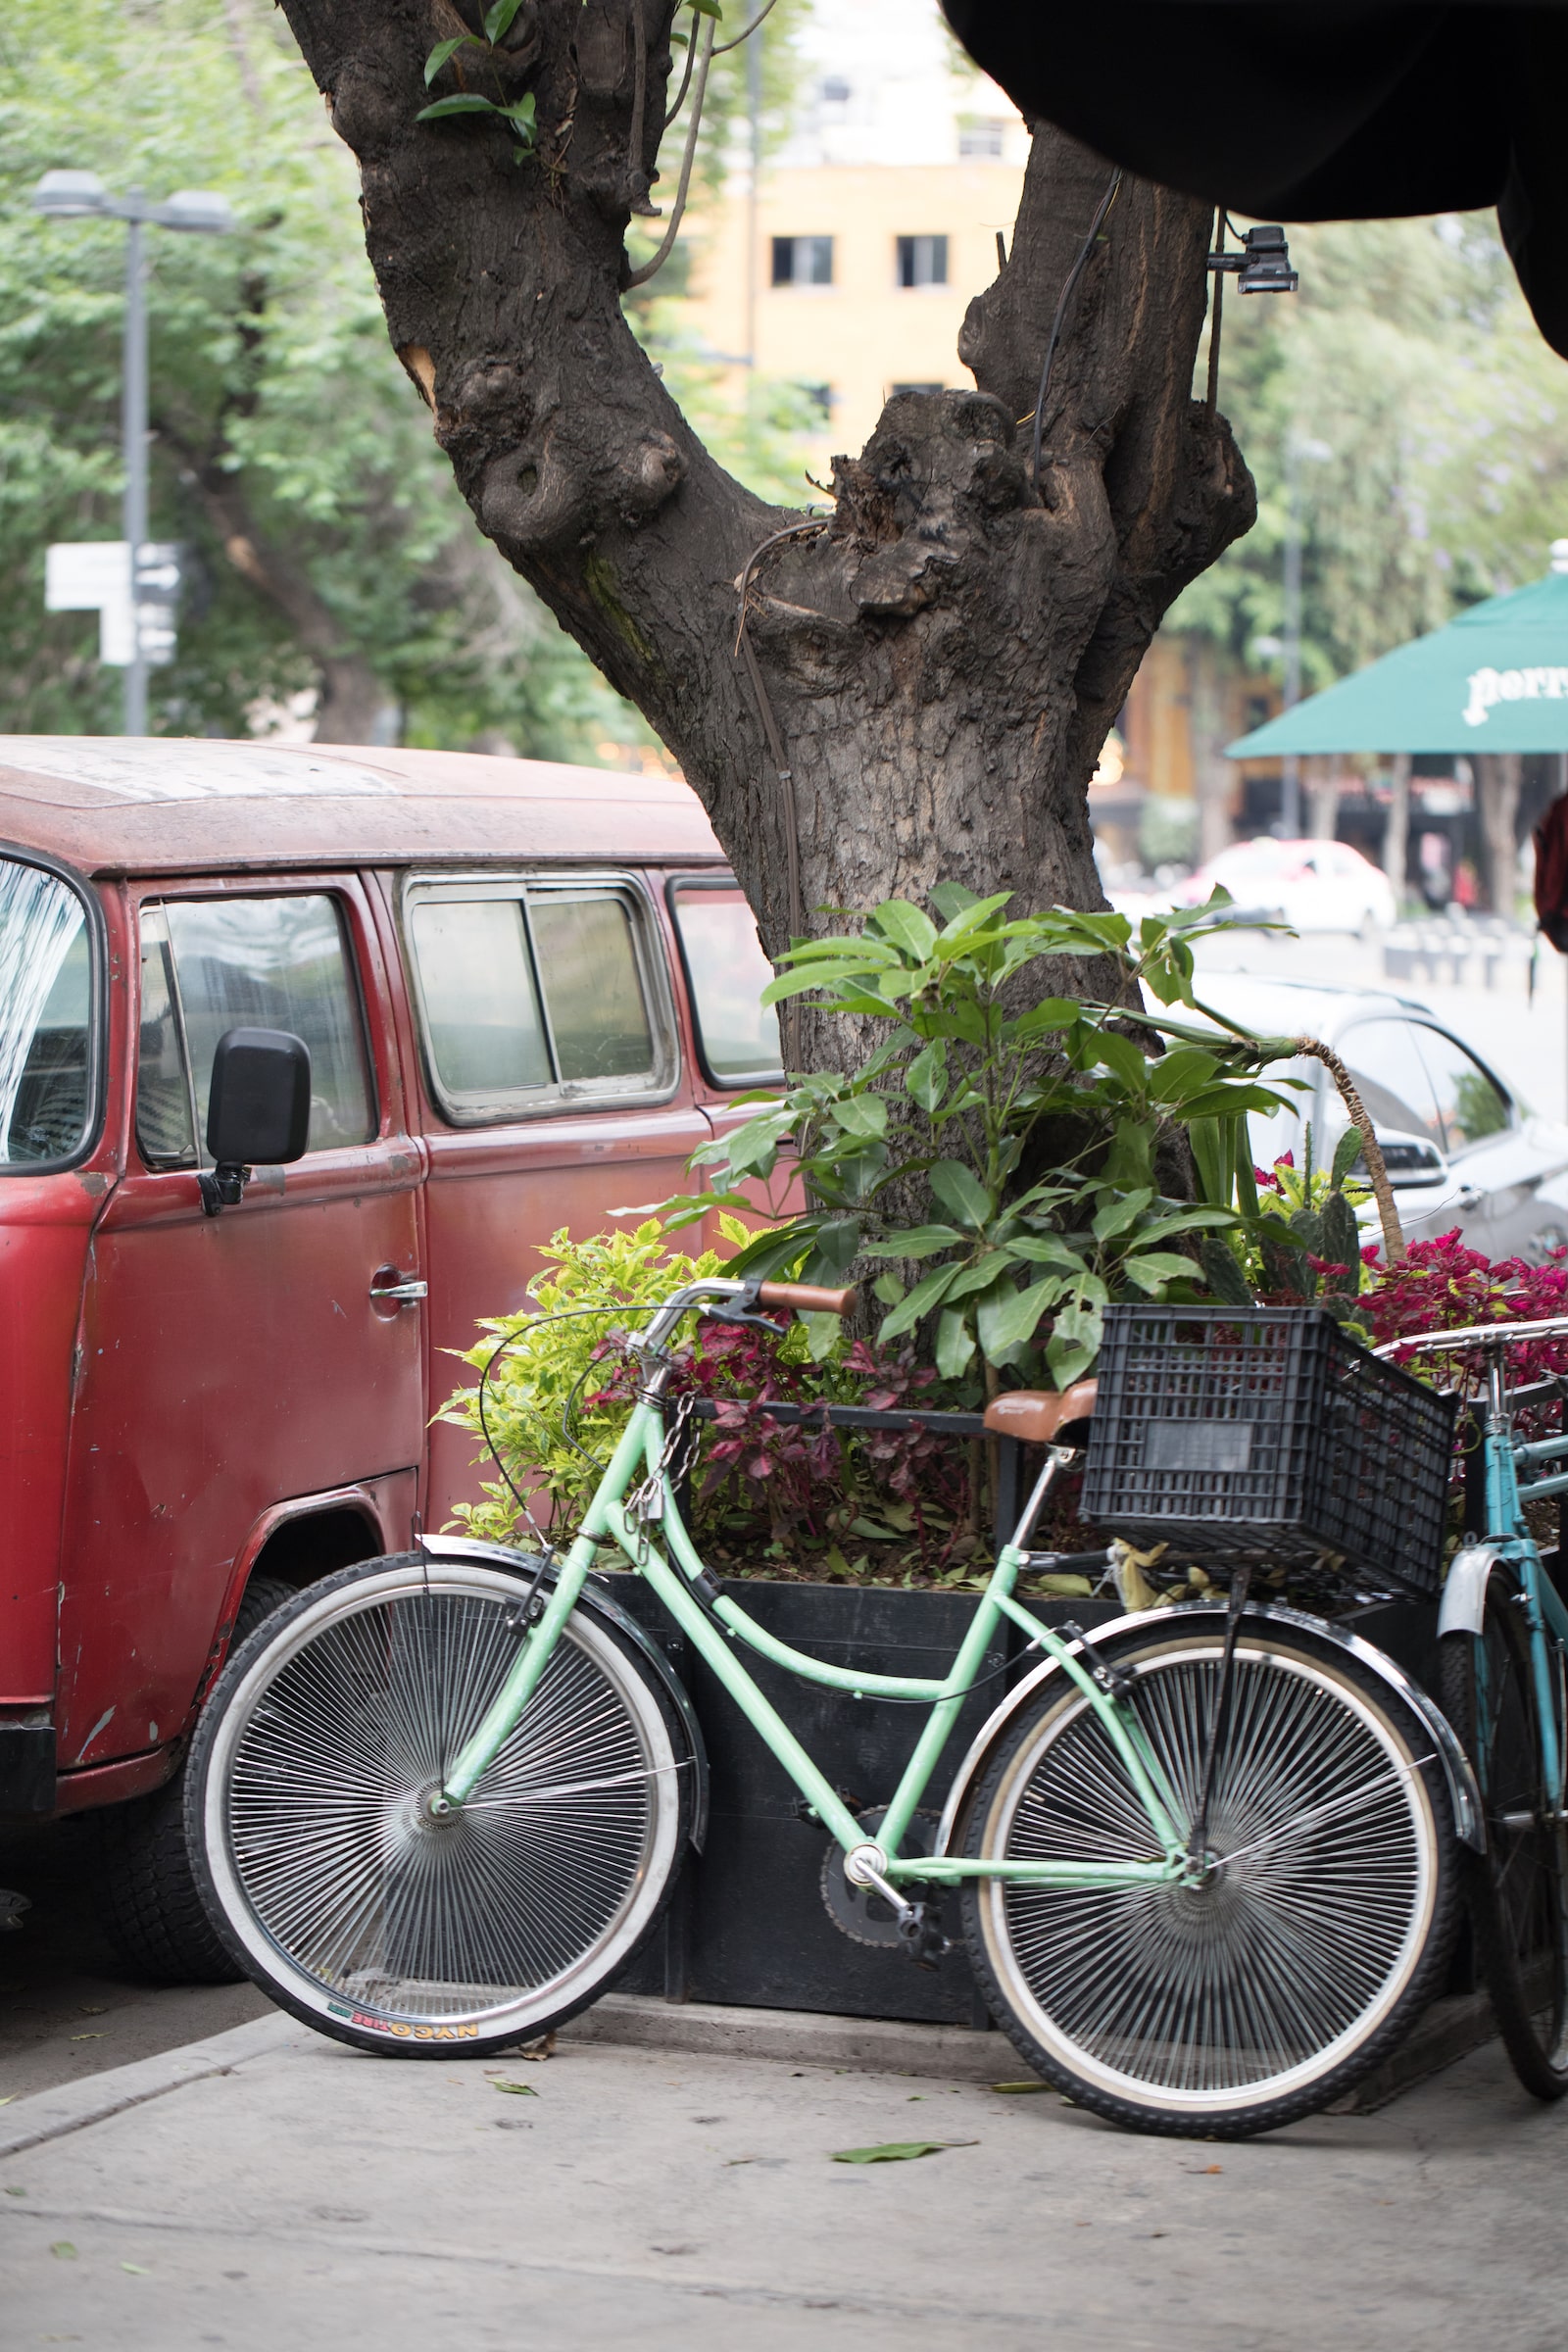 Bike On Streets In Roma Neighborhood Mexico City